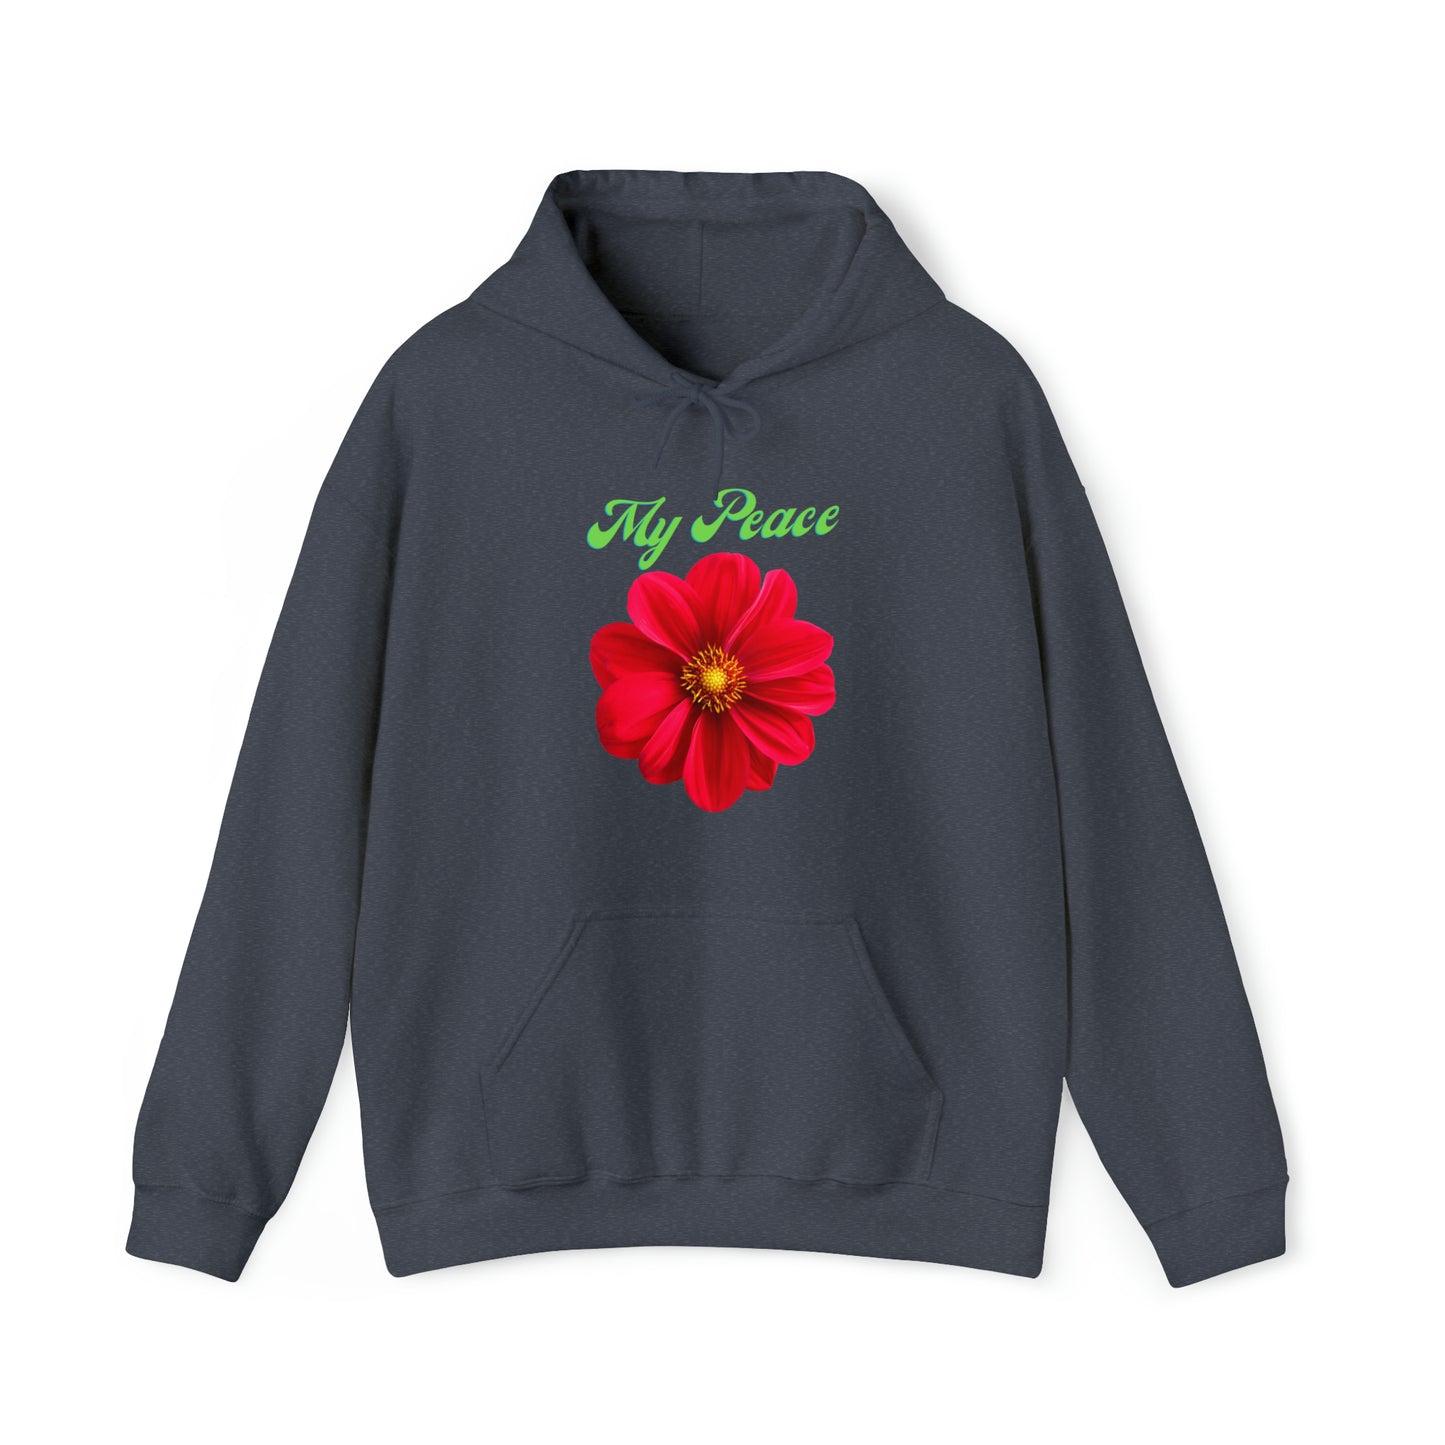 Beautiful red flower statement hoodie